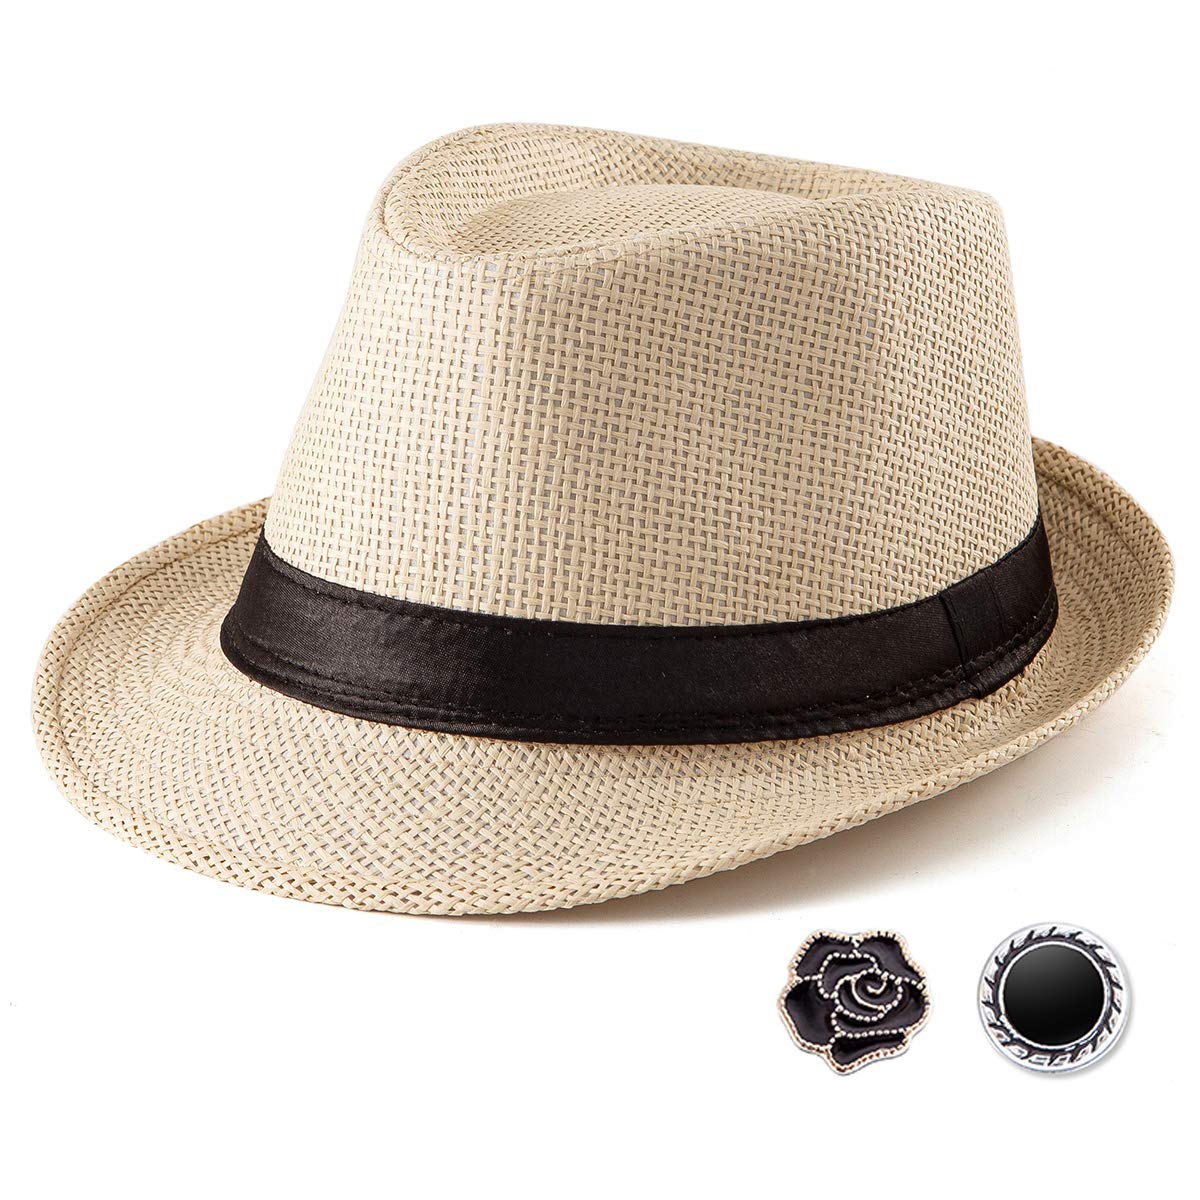 panama hats for men